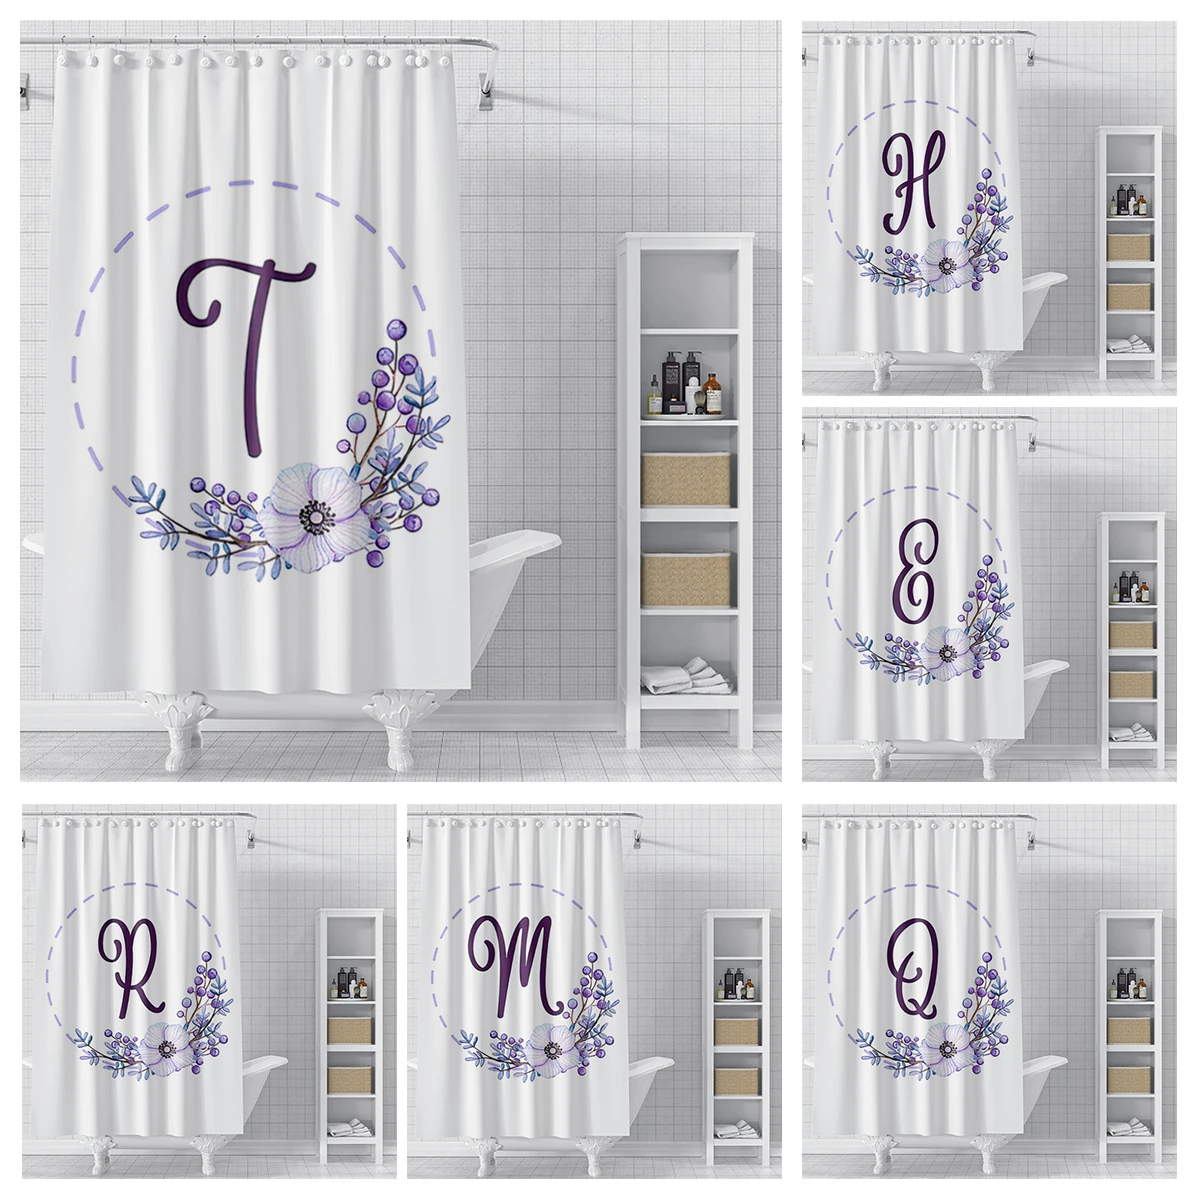 

Home decor 26 letter shower curtains for bathroom waterproof fabric bathroom Curtains modern shower curtain 180x200 240x200